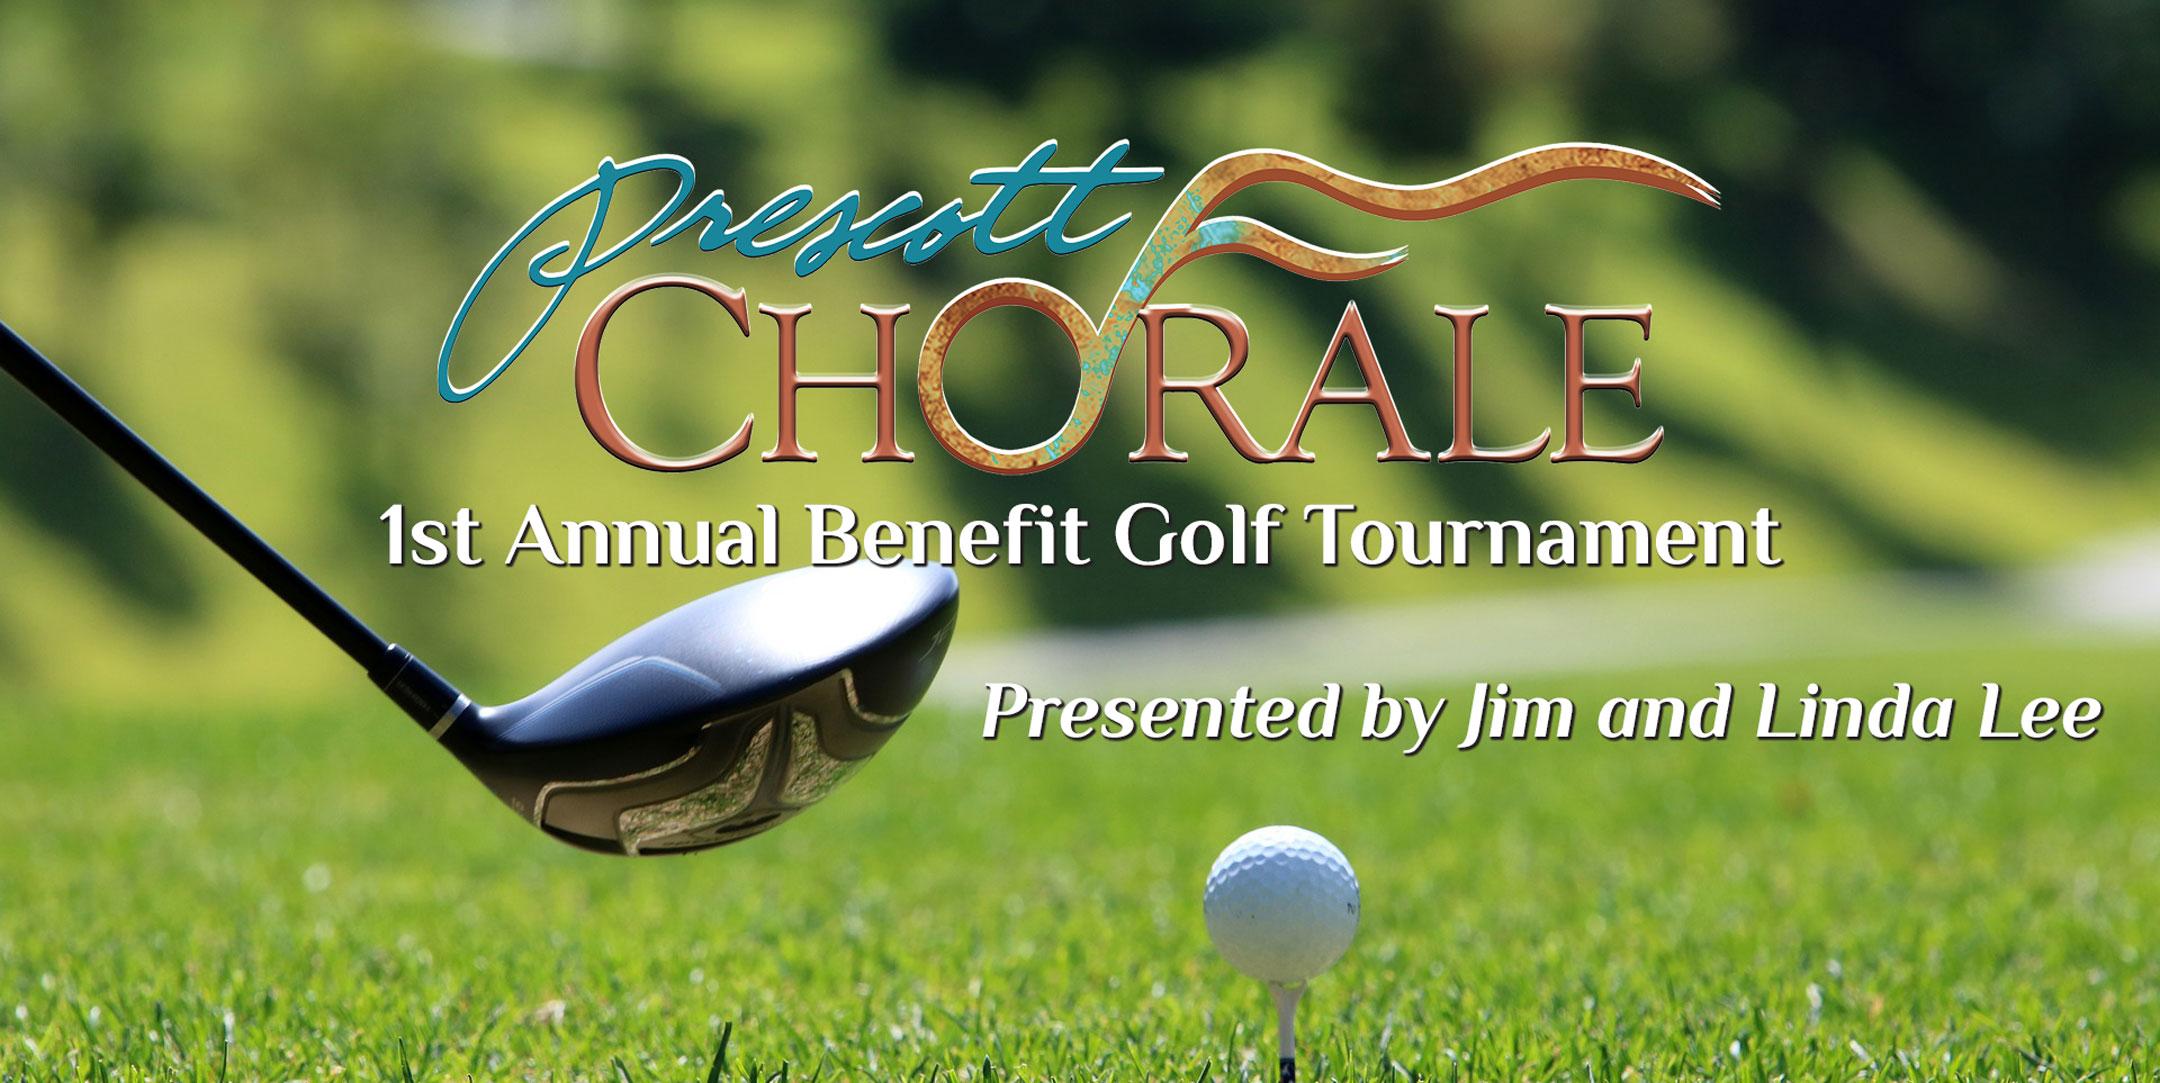 The Prescott Chorale 1st Annual Benefit Golf Tournament